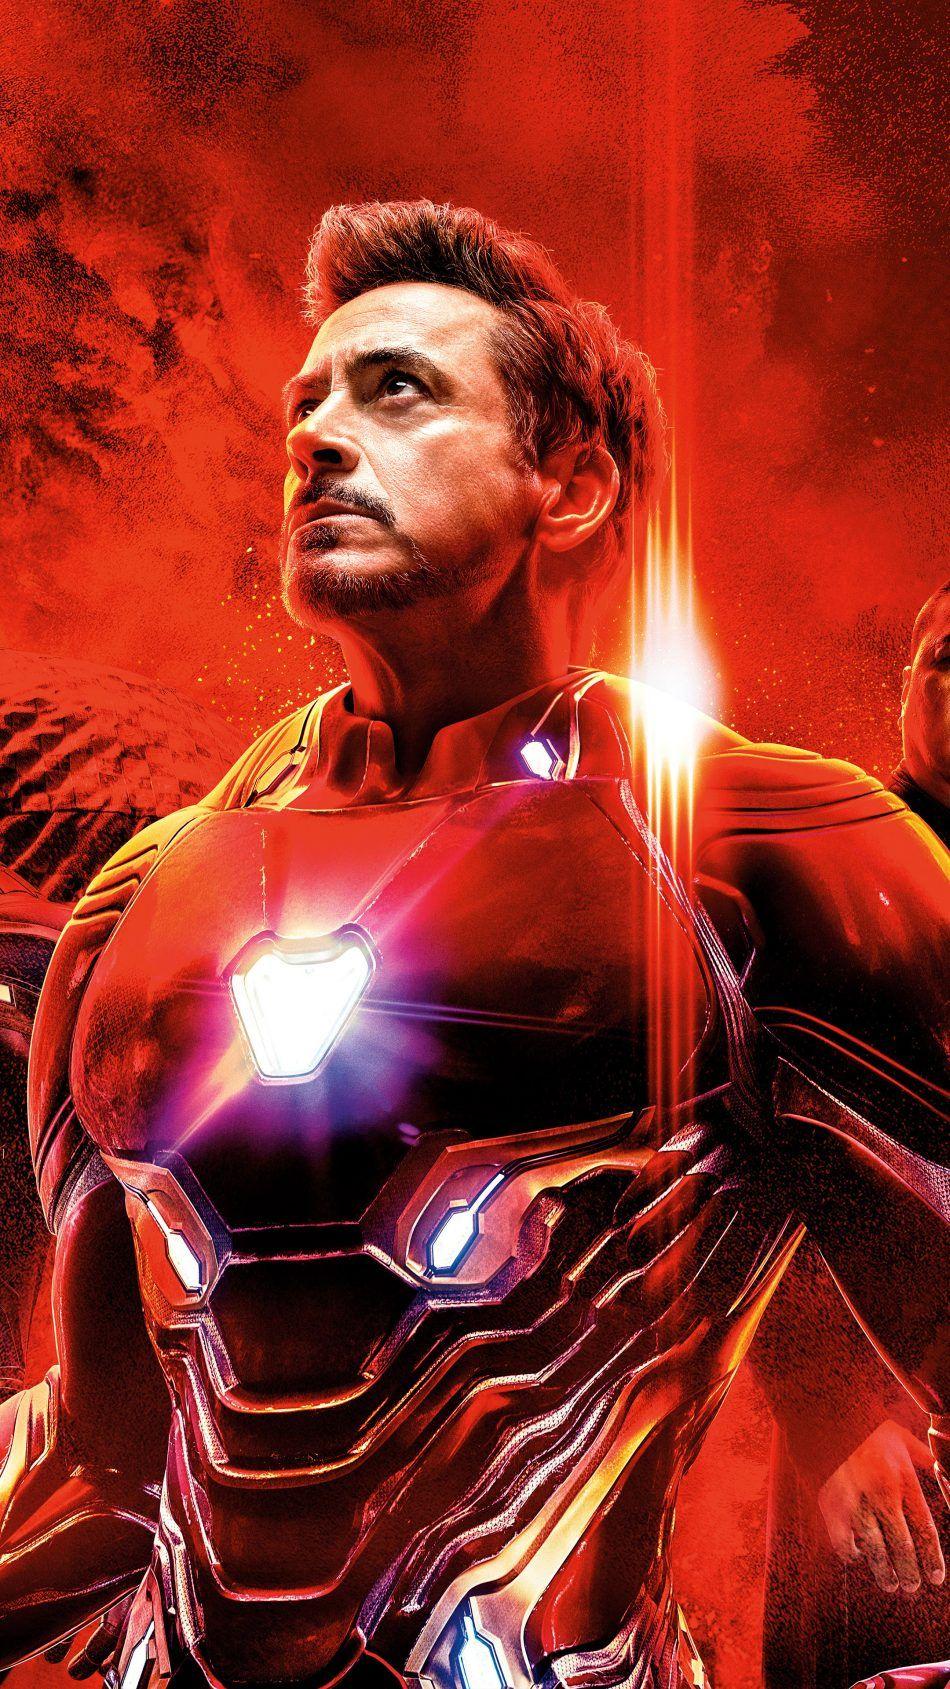 Iron Man In Avengers Endgame. Iron man HD wallpaper, Iron man